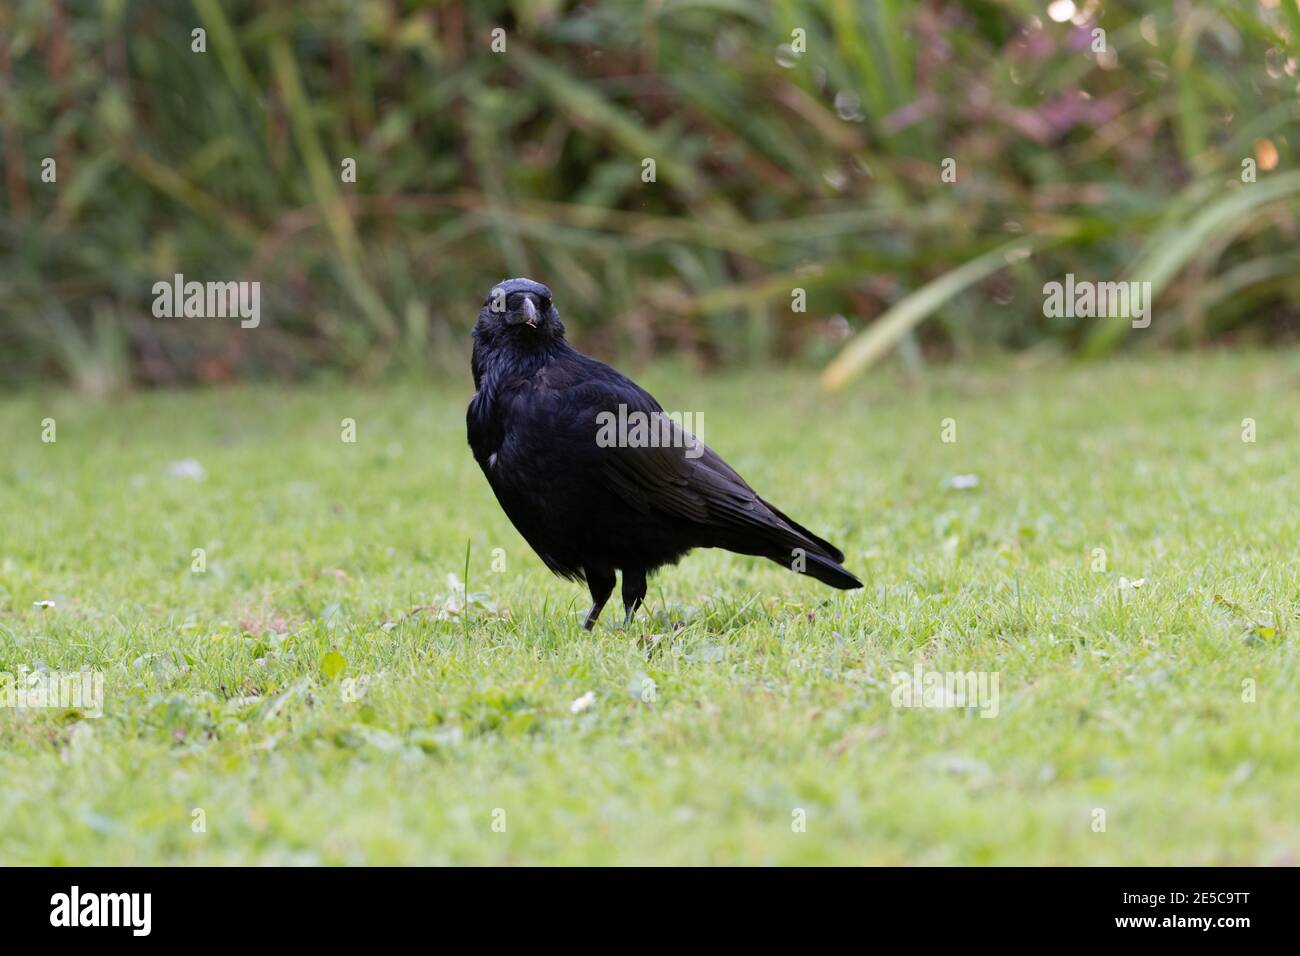 European Crow (Corvus brachyrhynchos) sitting in the grass on the ground Stock Photo